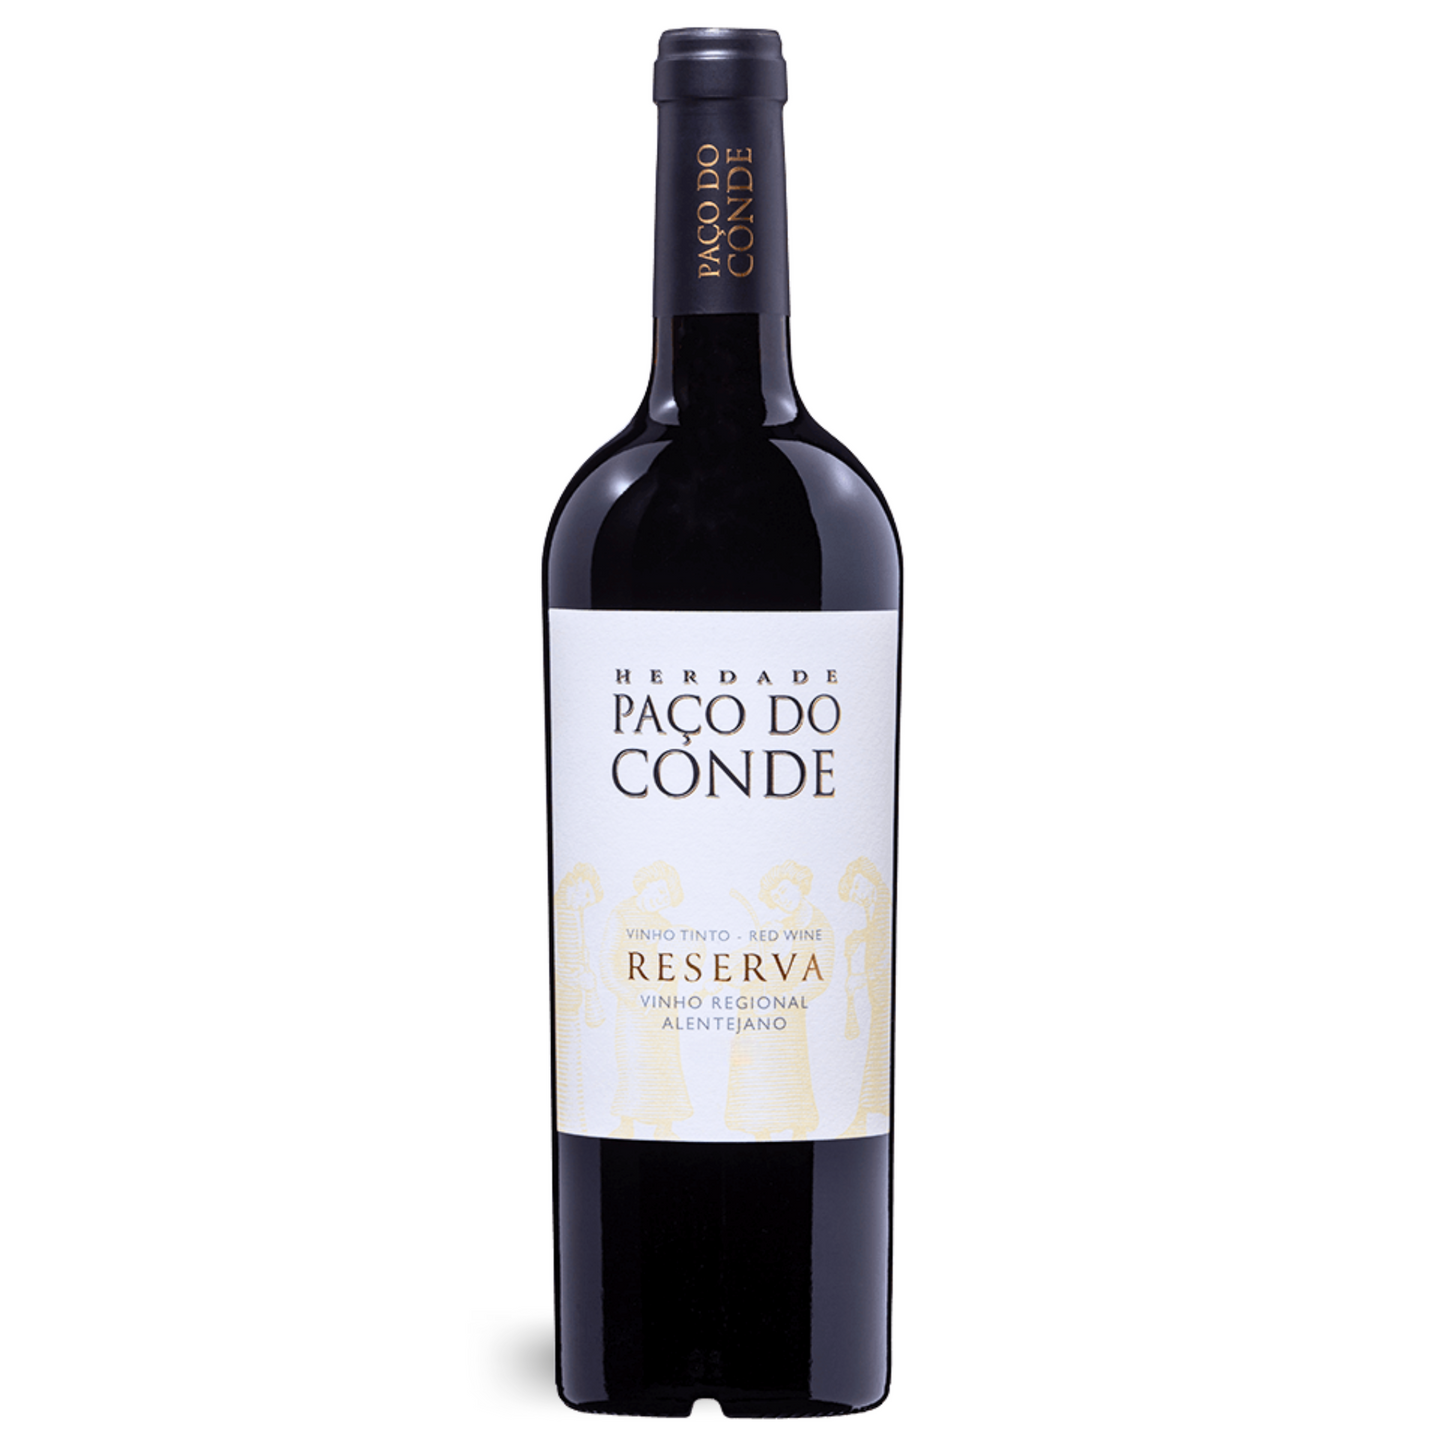 HERDADE PAÇO DO CONDE RESERVA: Rotwein vom Weingut Herdade Paco do Conde aus dem dem Alentejo/Portugal von der Vinho Bar.